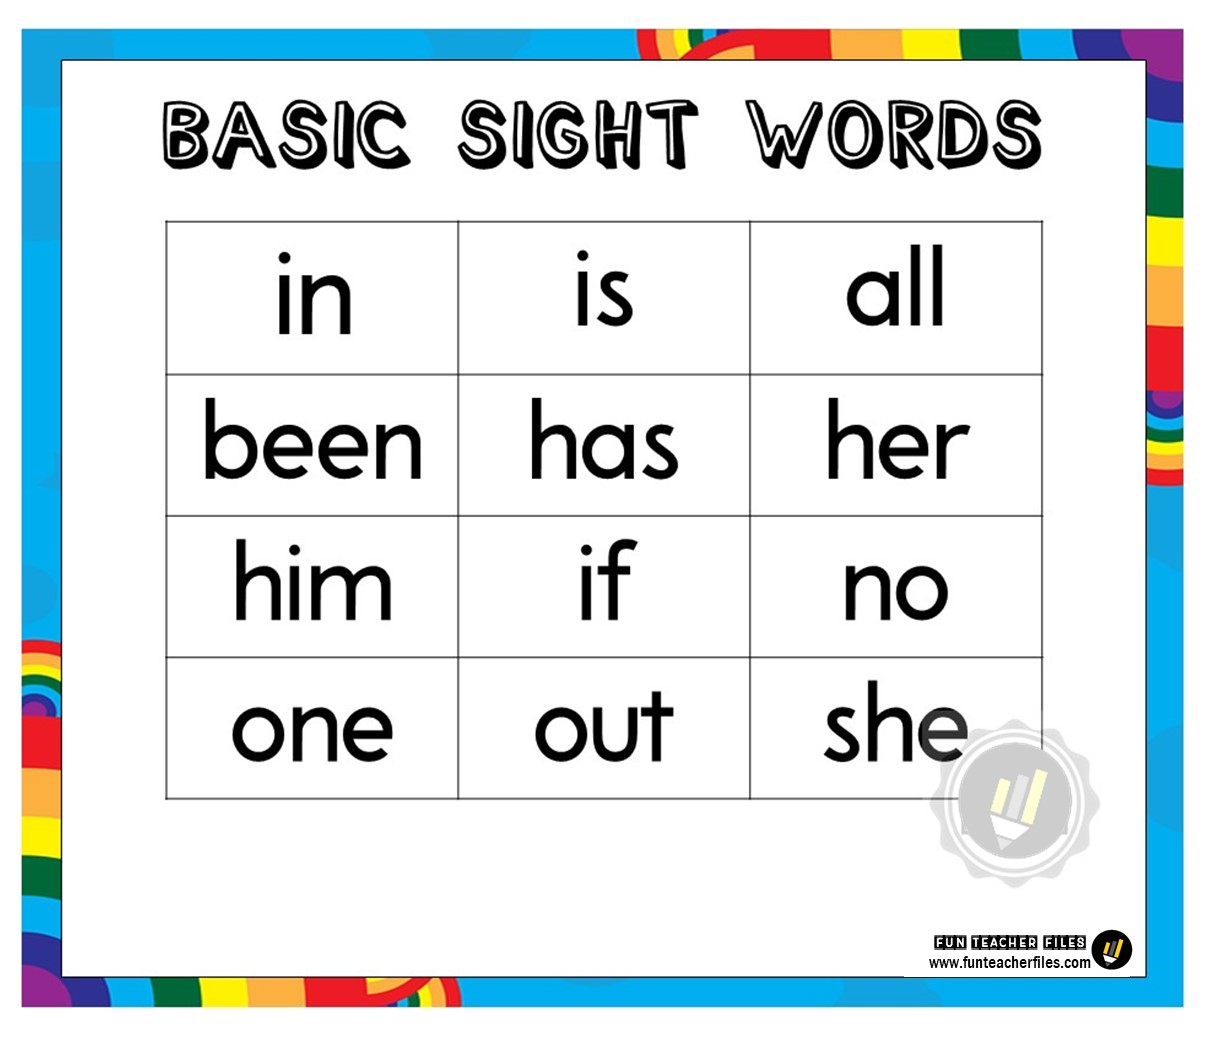 basic-sight-words-charts-fun-teacher-files